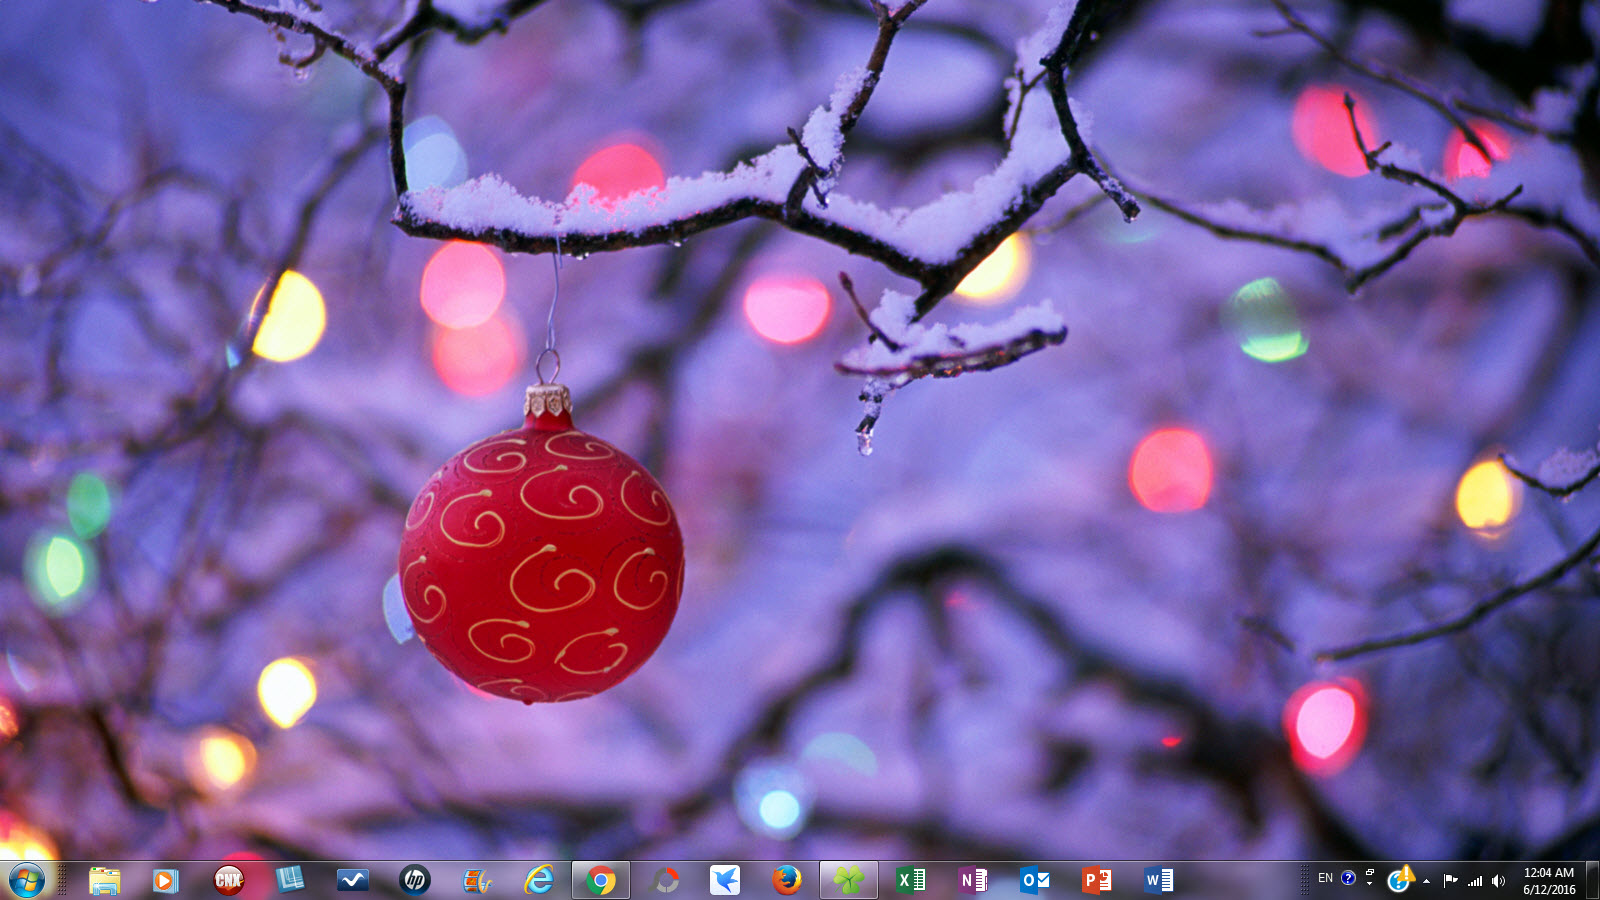 Windows 7 Christmas Theme - Decorating the Trees